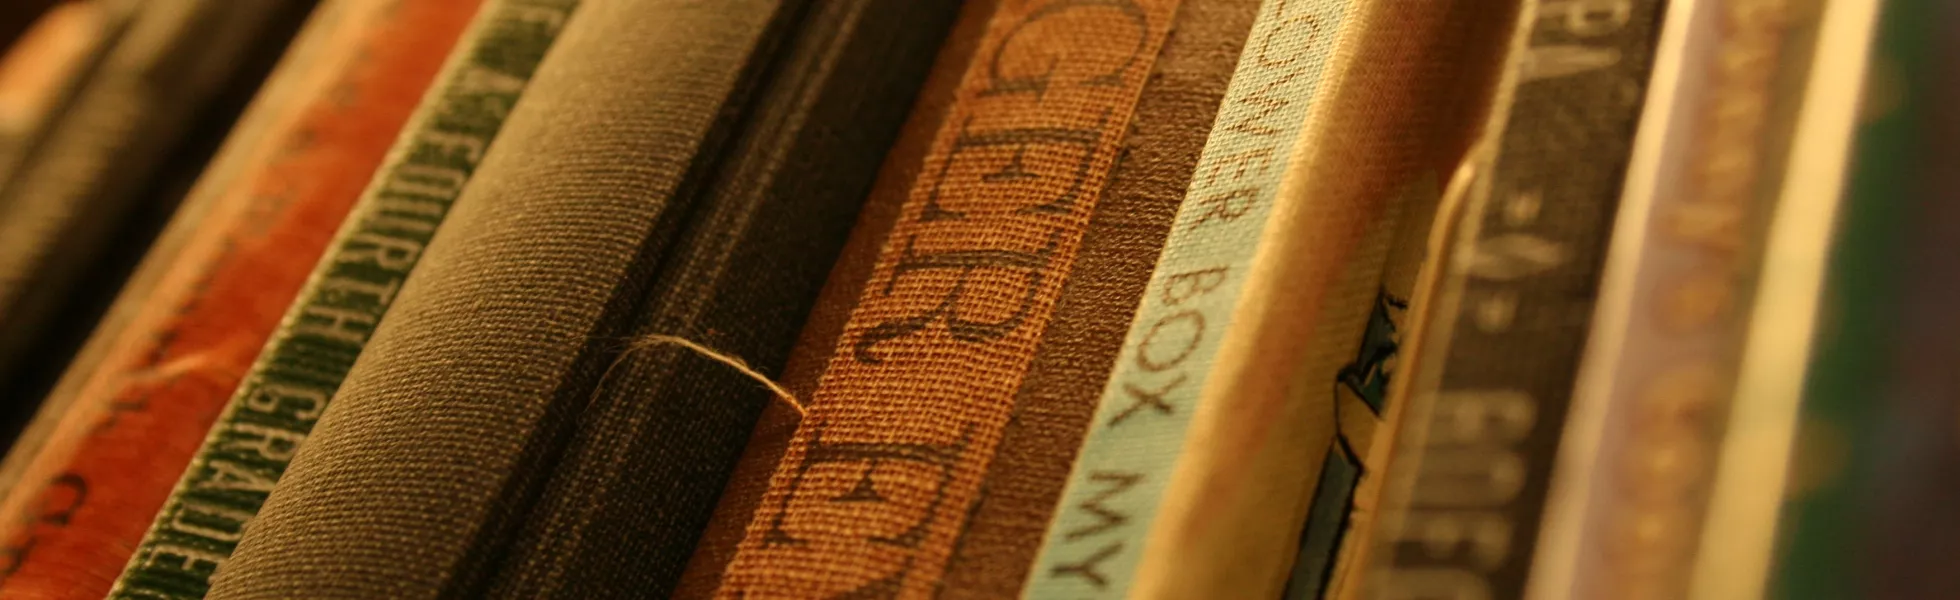 Close-up of books on a shelf.